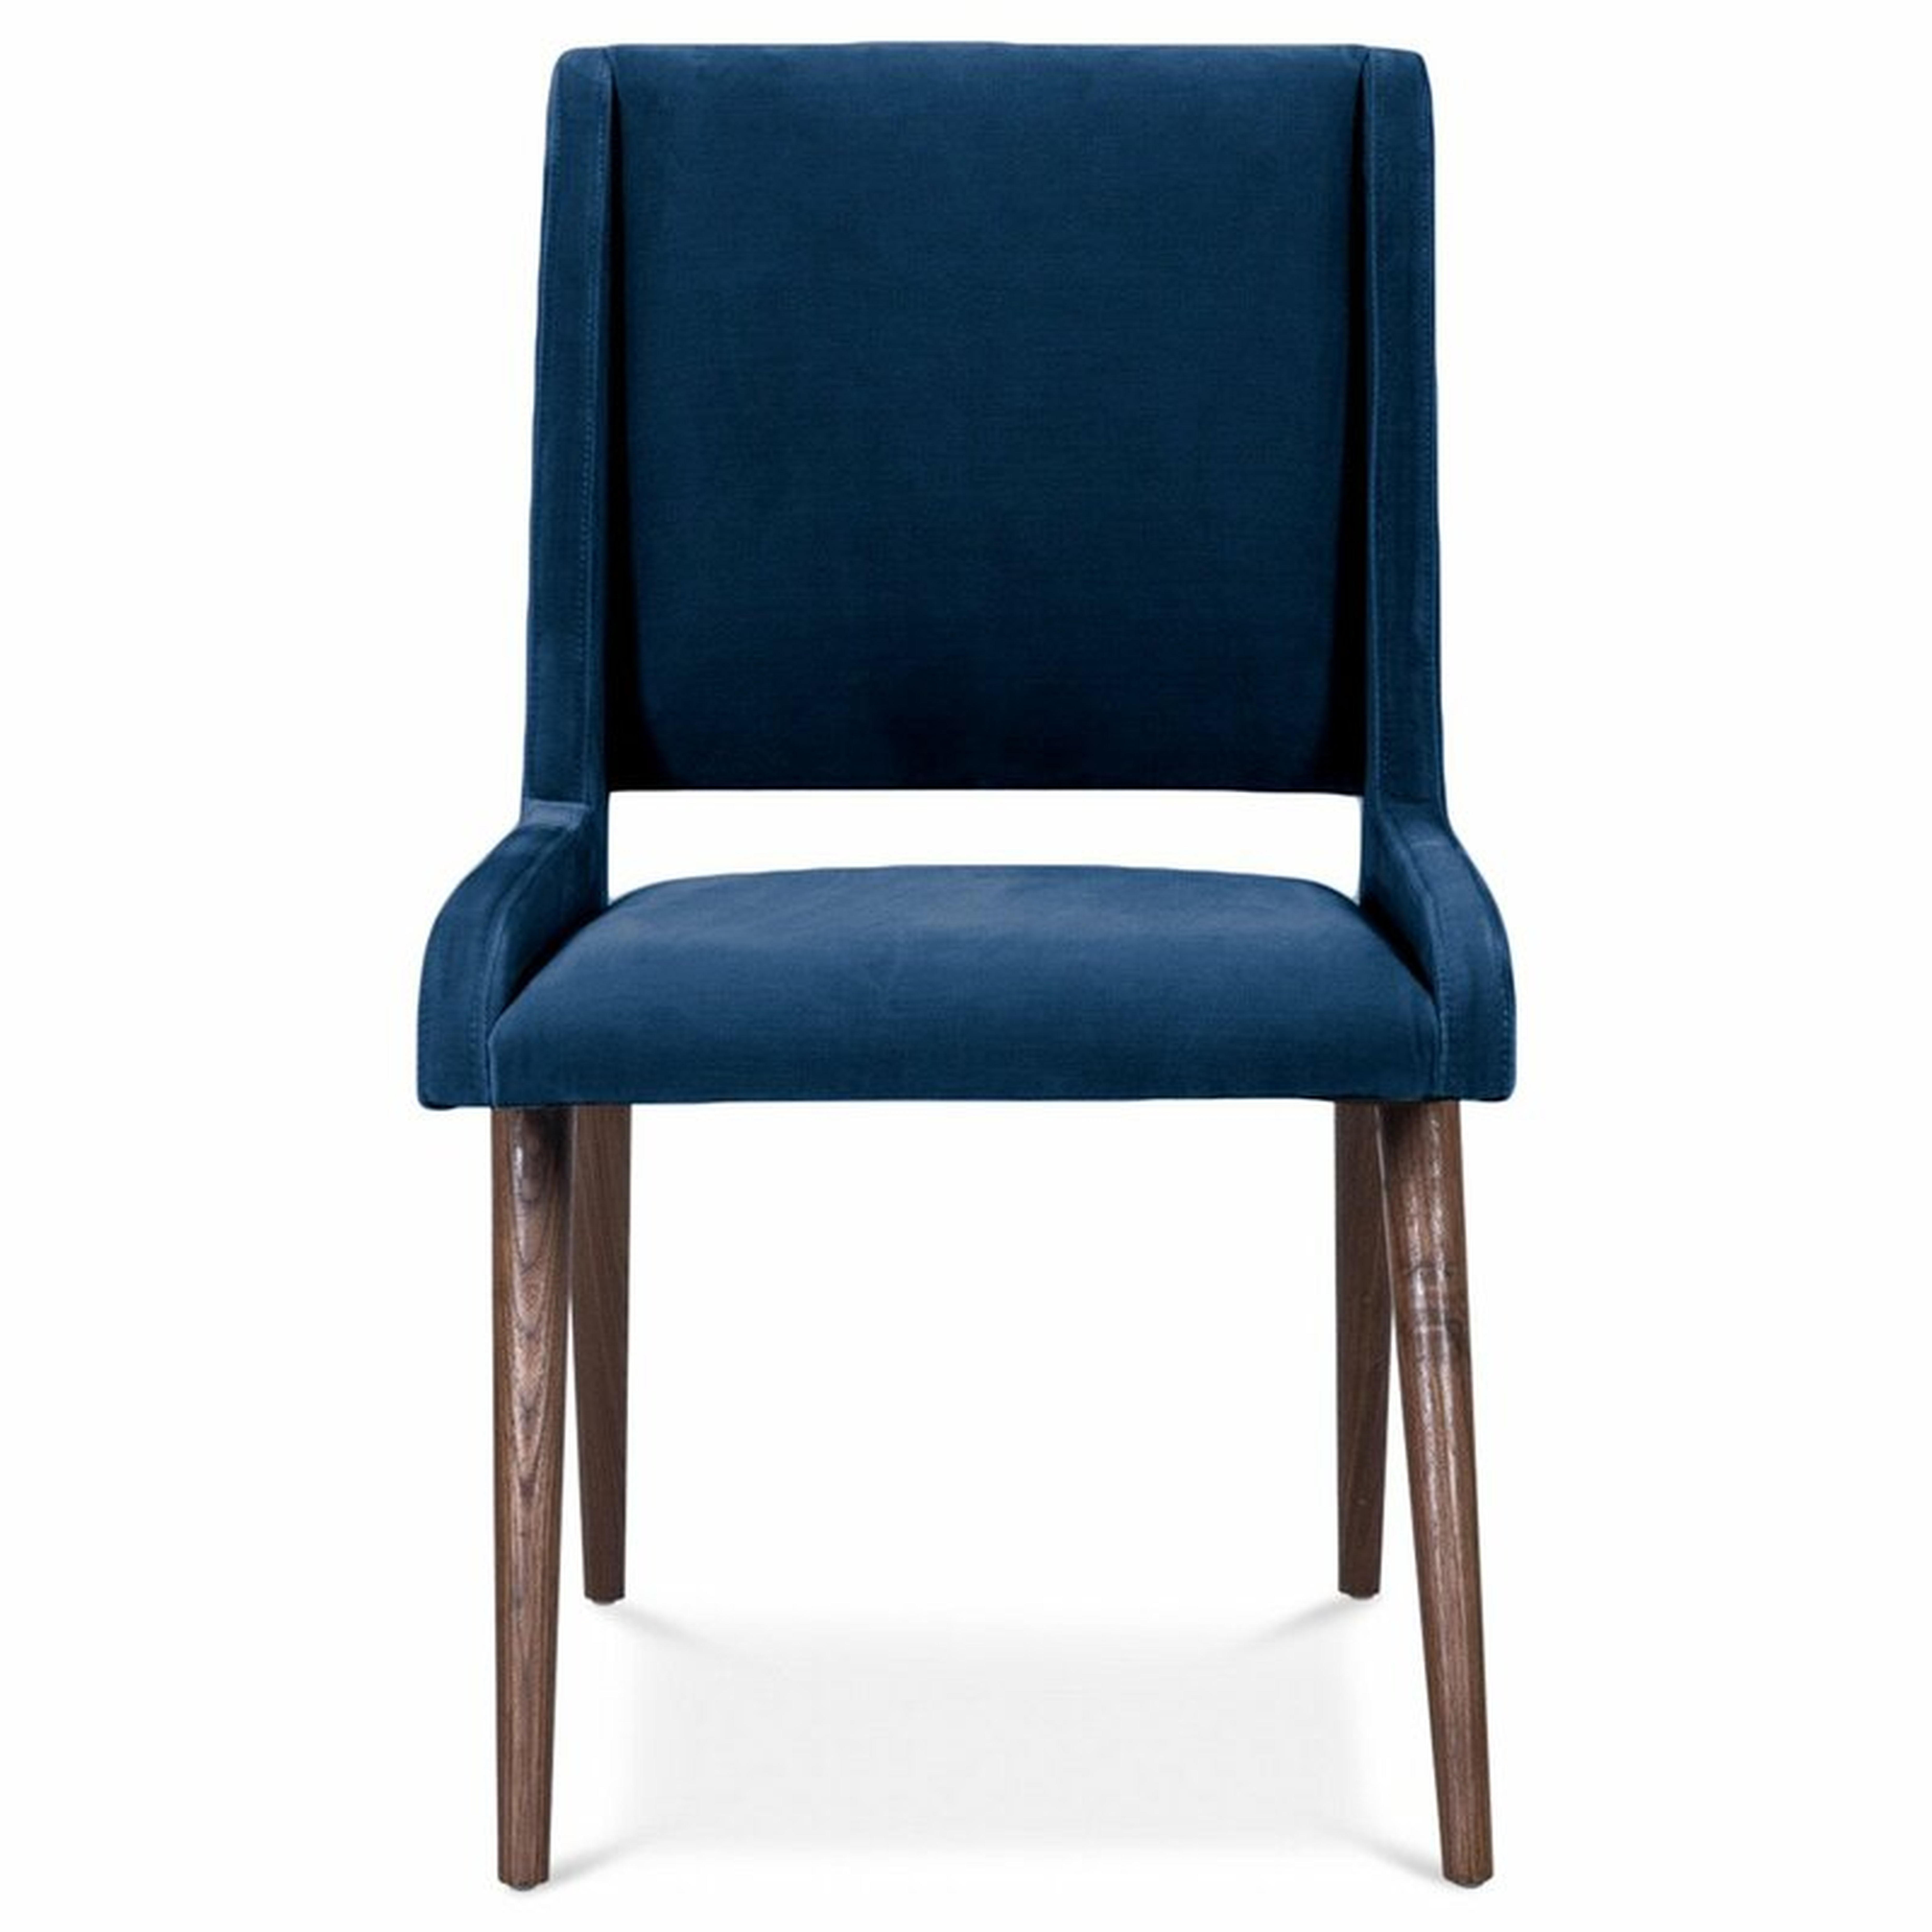 Mid Century Upholstered Dining Chair Upholstery Color: Indigo Blue, Leg Color: Dark Walnut - Perigold